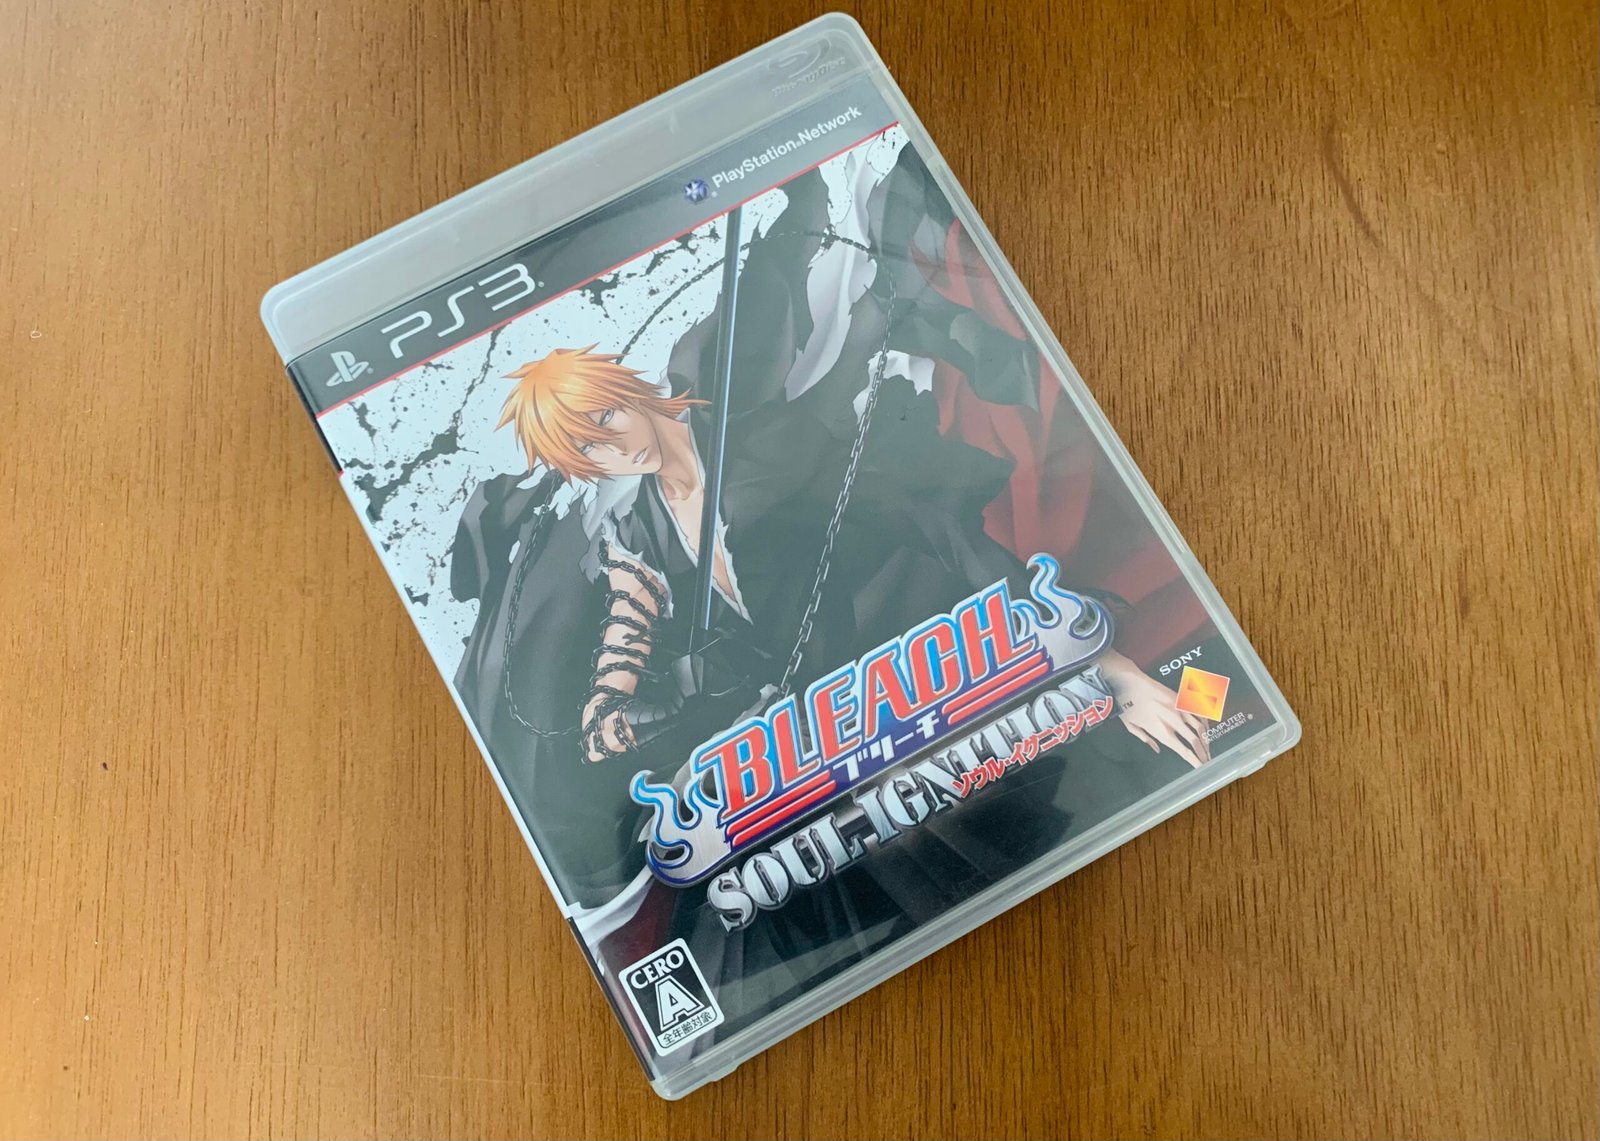 Bleach: Soul Resurreccion - Playstation 3